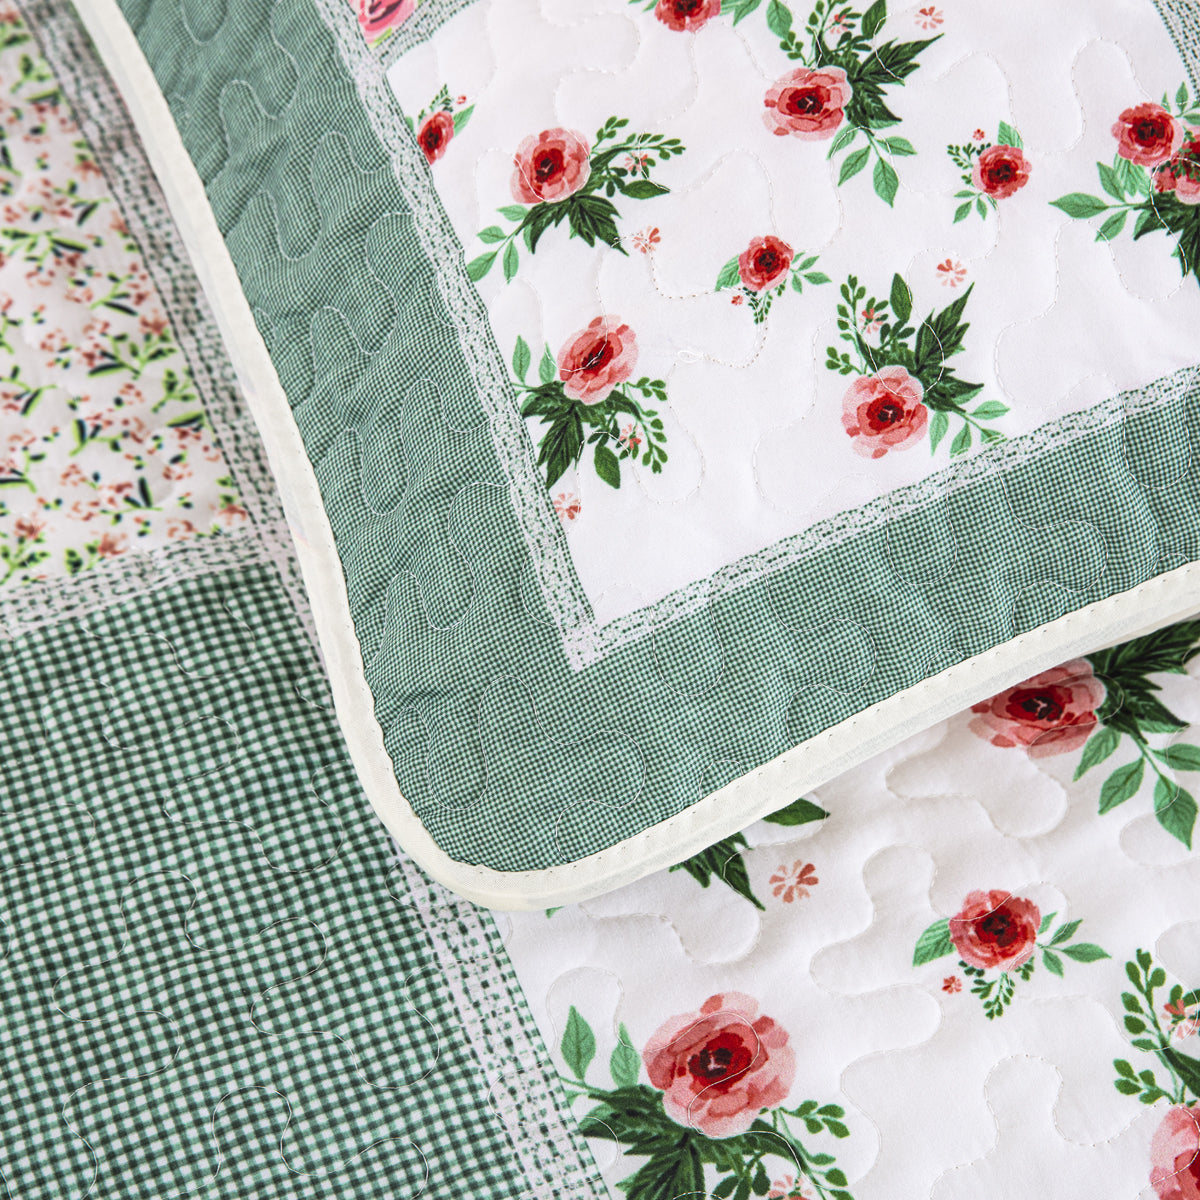 Flower Art Design 3 Pieces Quilt Set with 2 Pillowcases